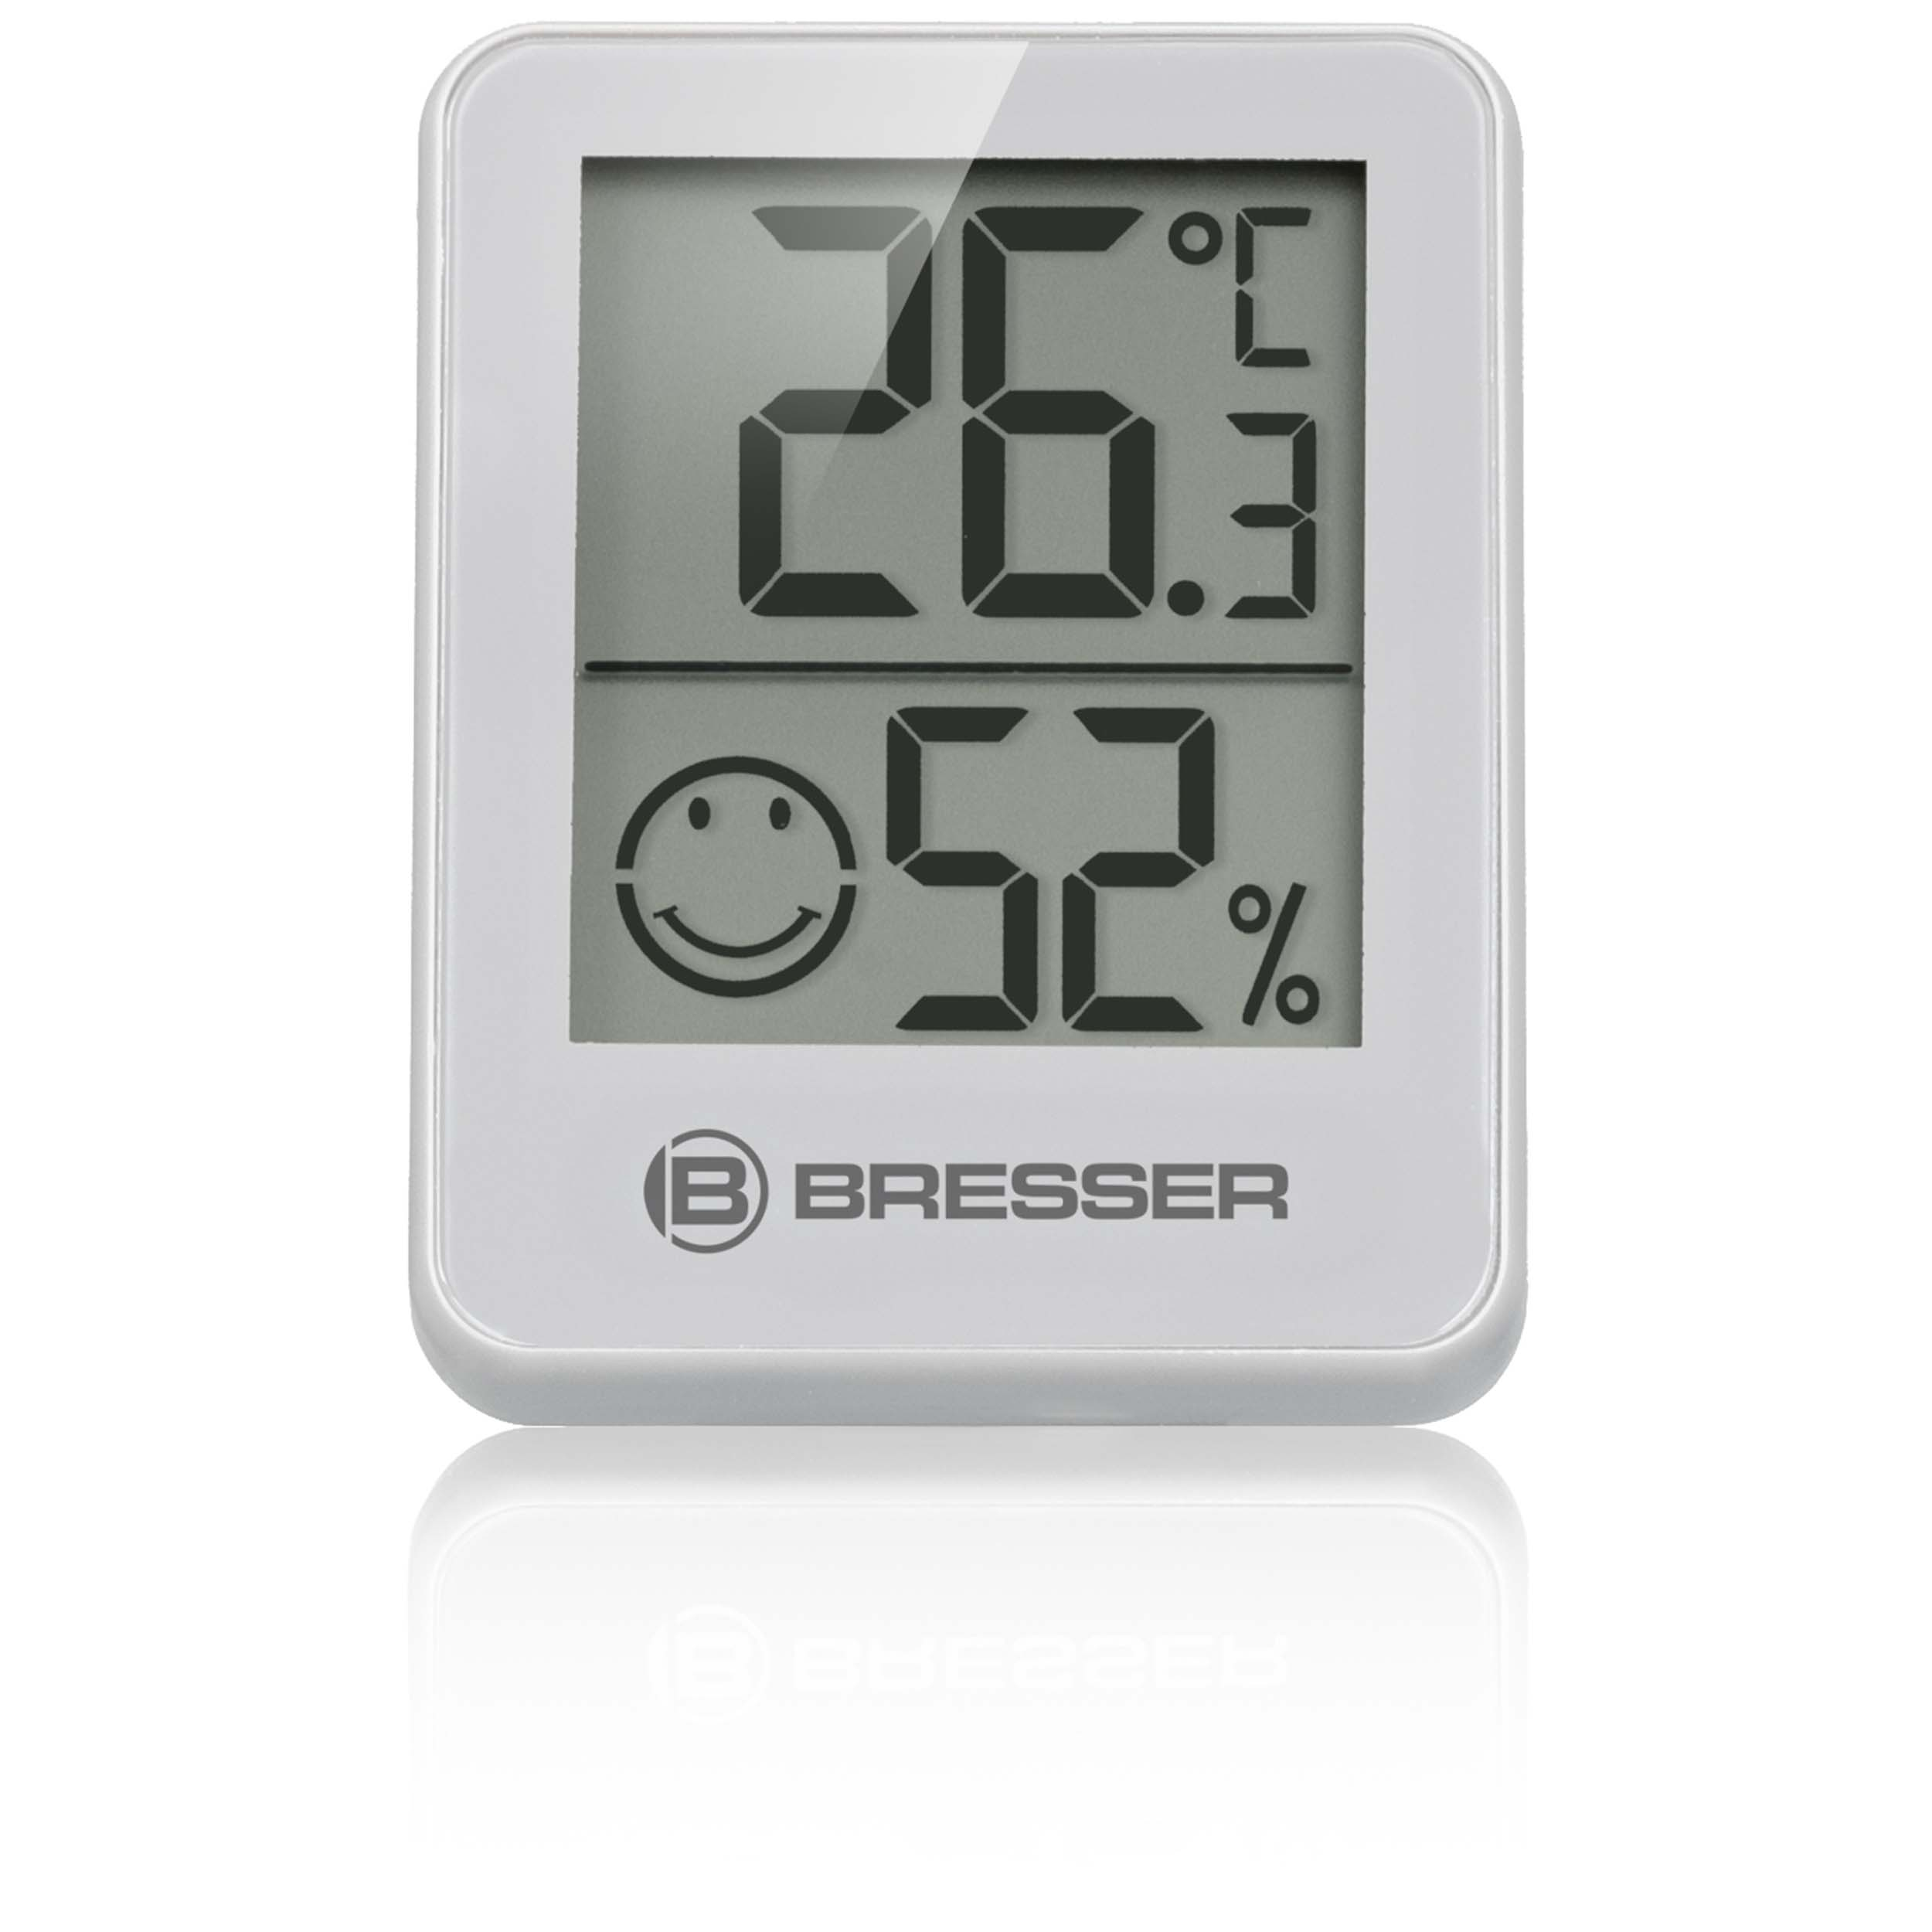 BRESSER ClimaTemp Wetterstation Thermo-Hygrometer